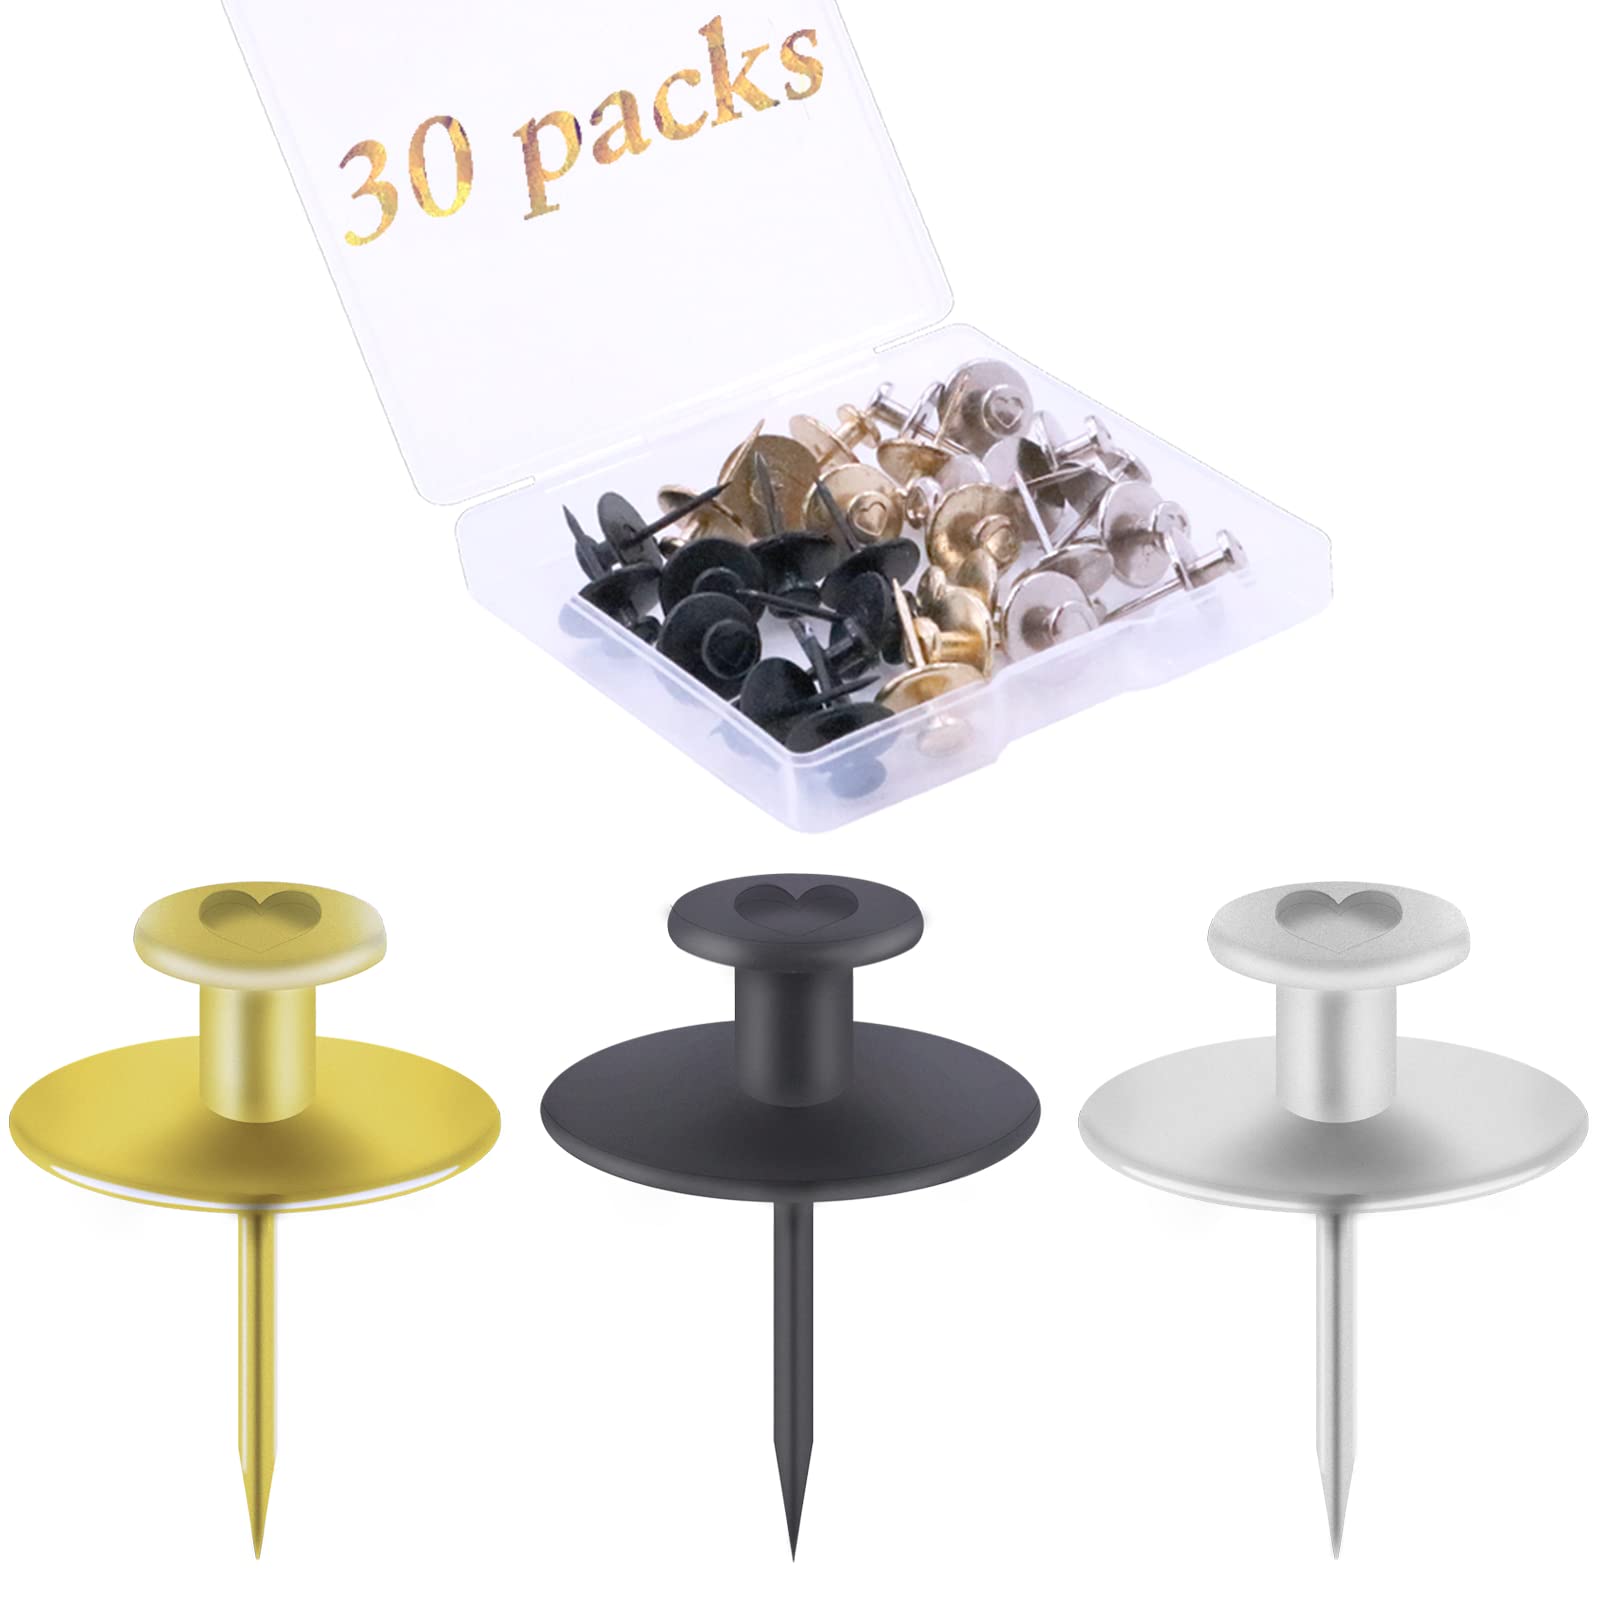 30 PCS Push Pins Picture Hanger Hooks, Double Headed Nails Push